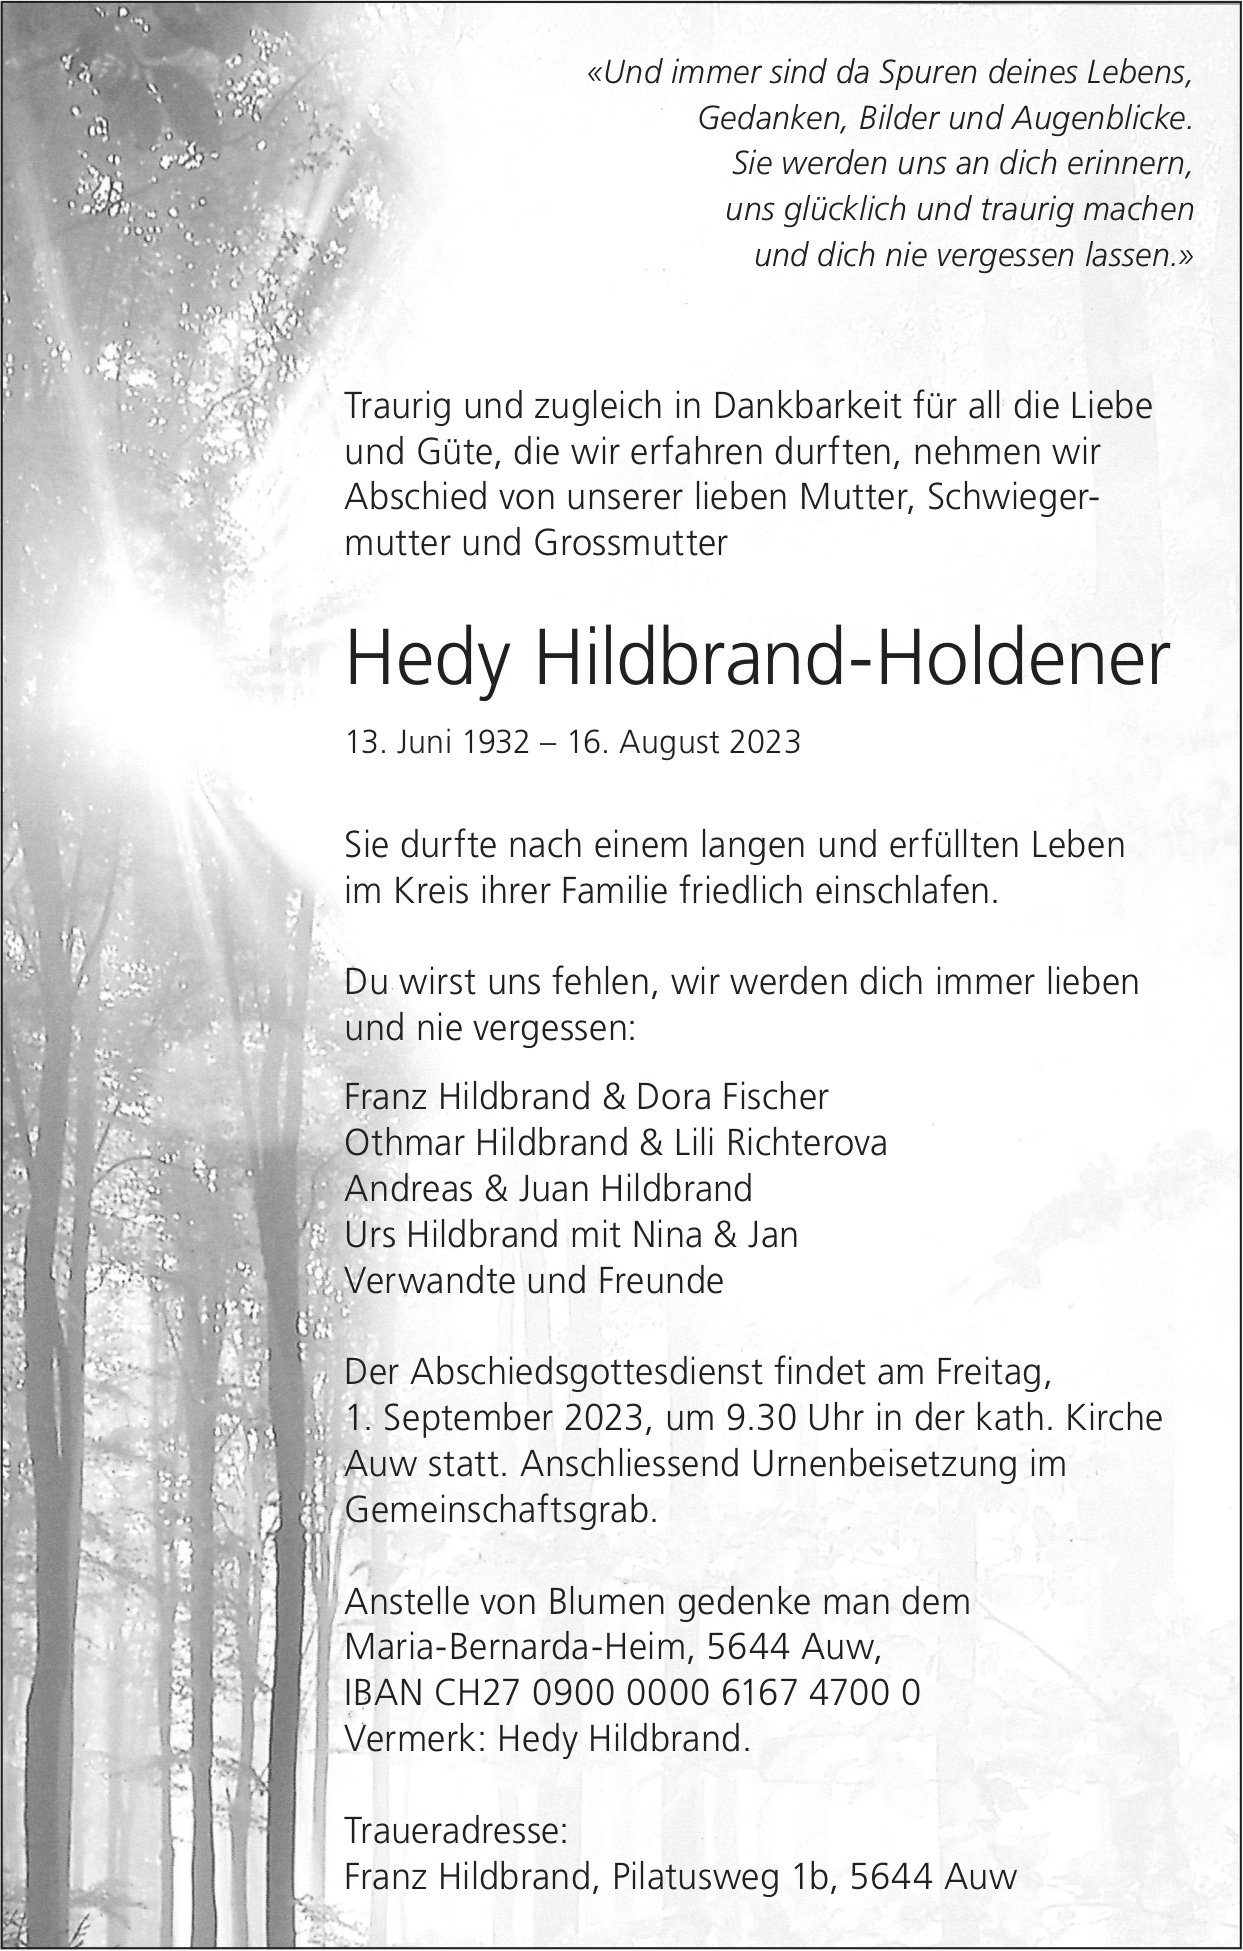 Hildbrand-­Holdener Hedy, August 2023 / TA